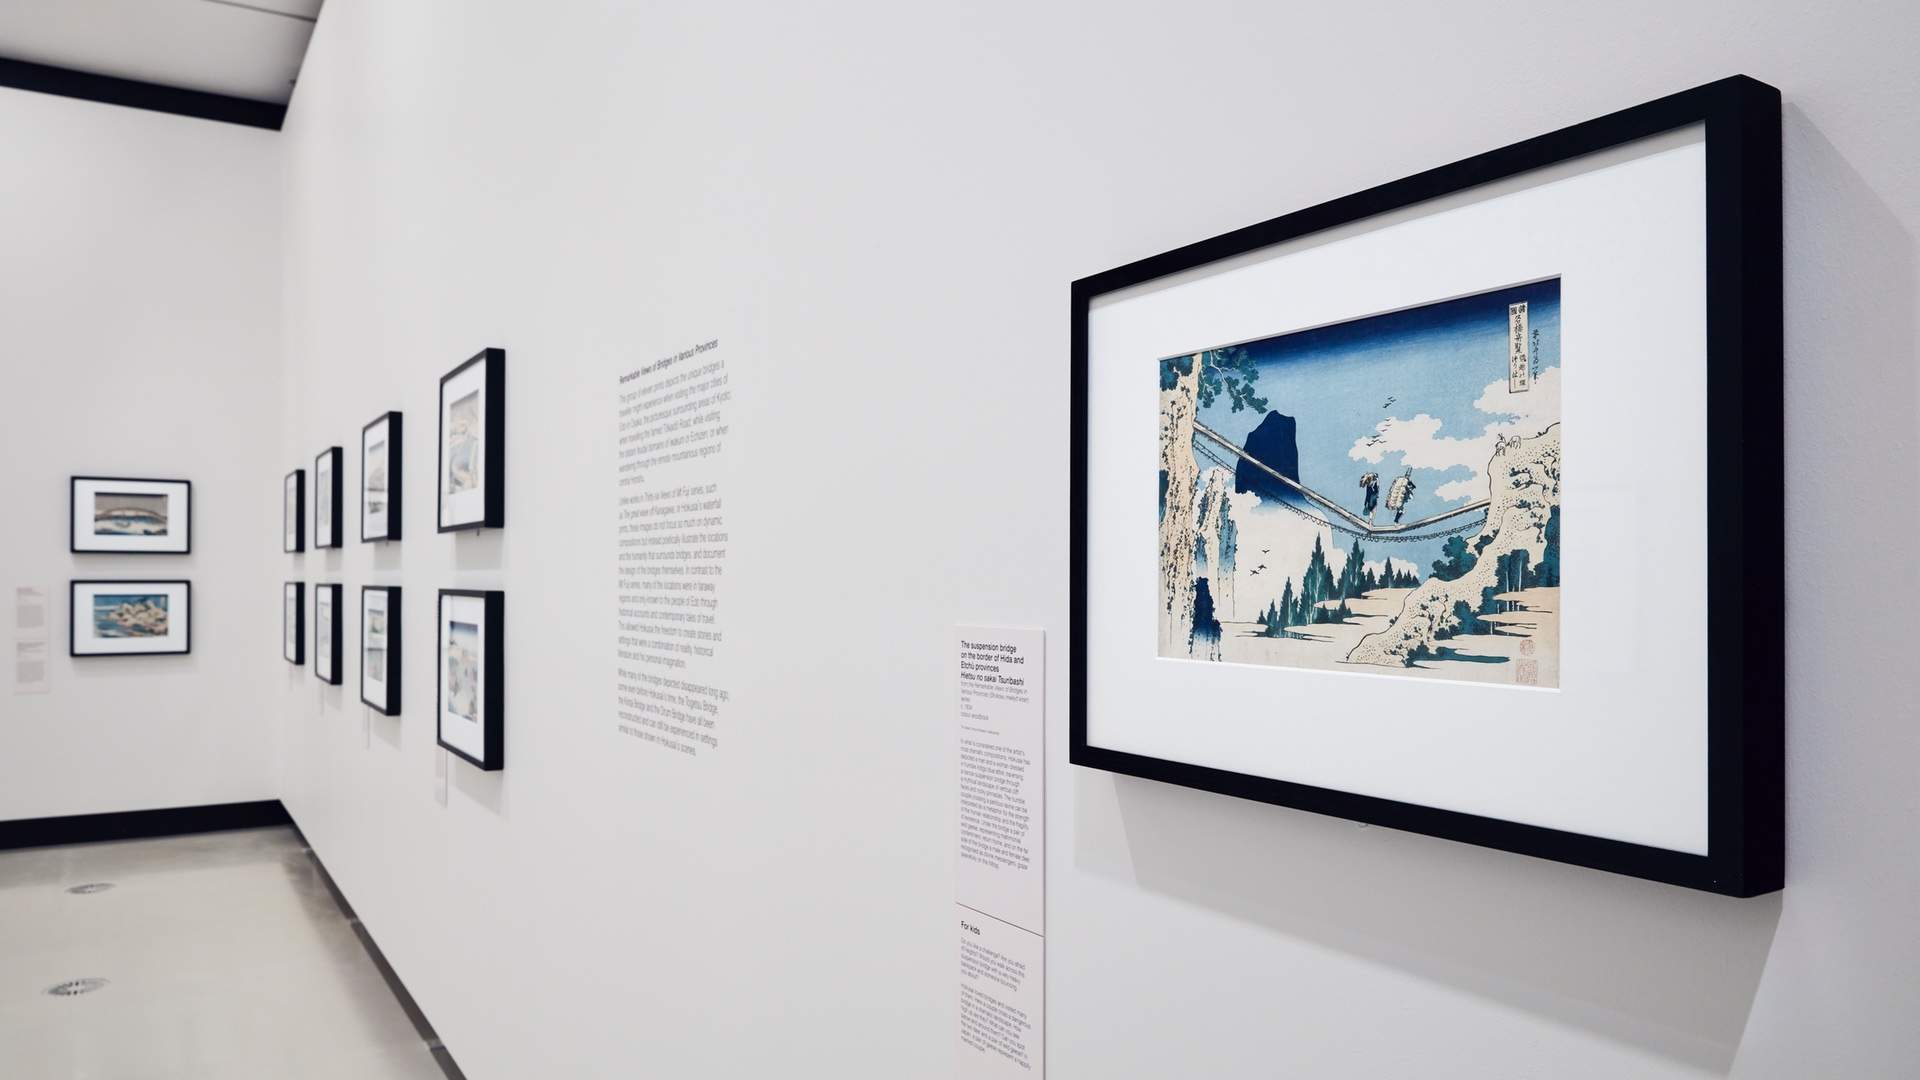 A Look Inside the NGV's Massive New Katsushika Hokusai Exhibition